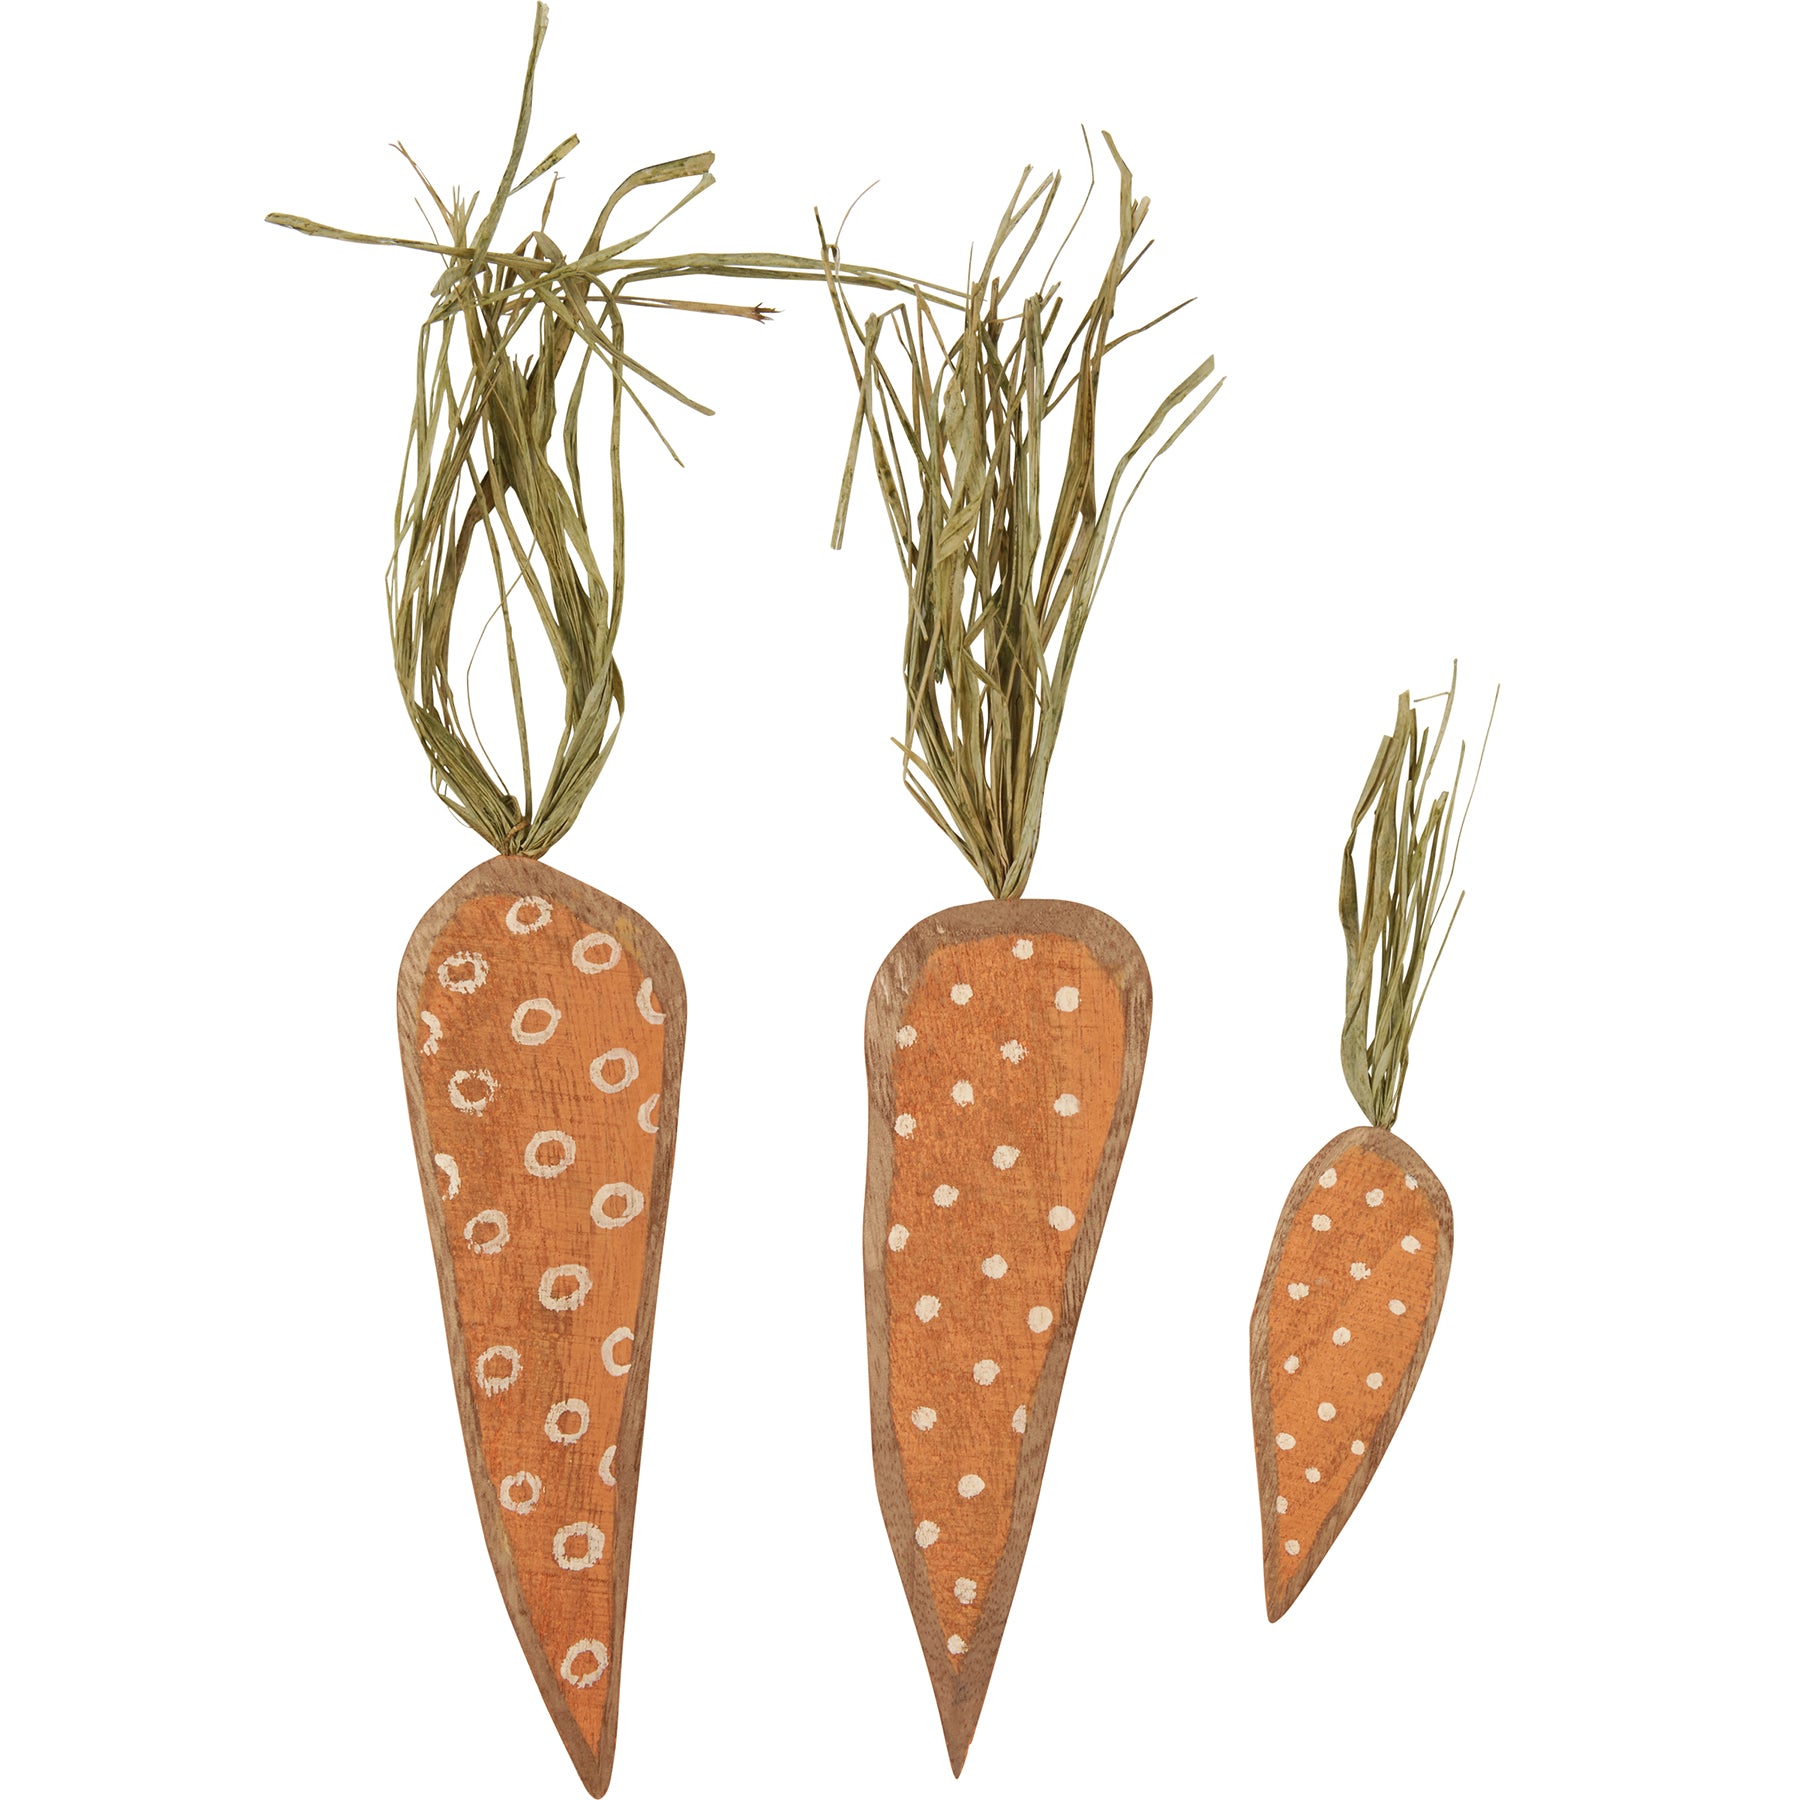 Wooden Carrots - Set of 3